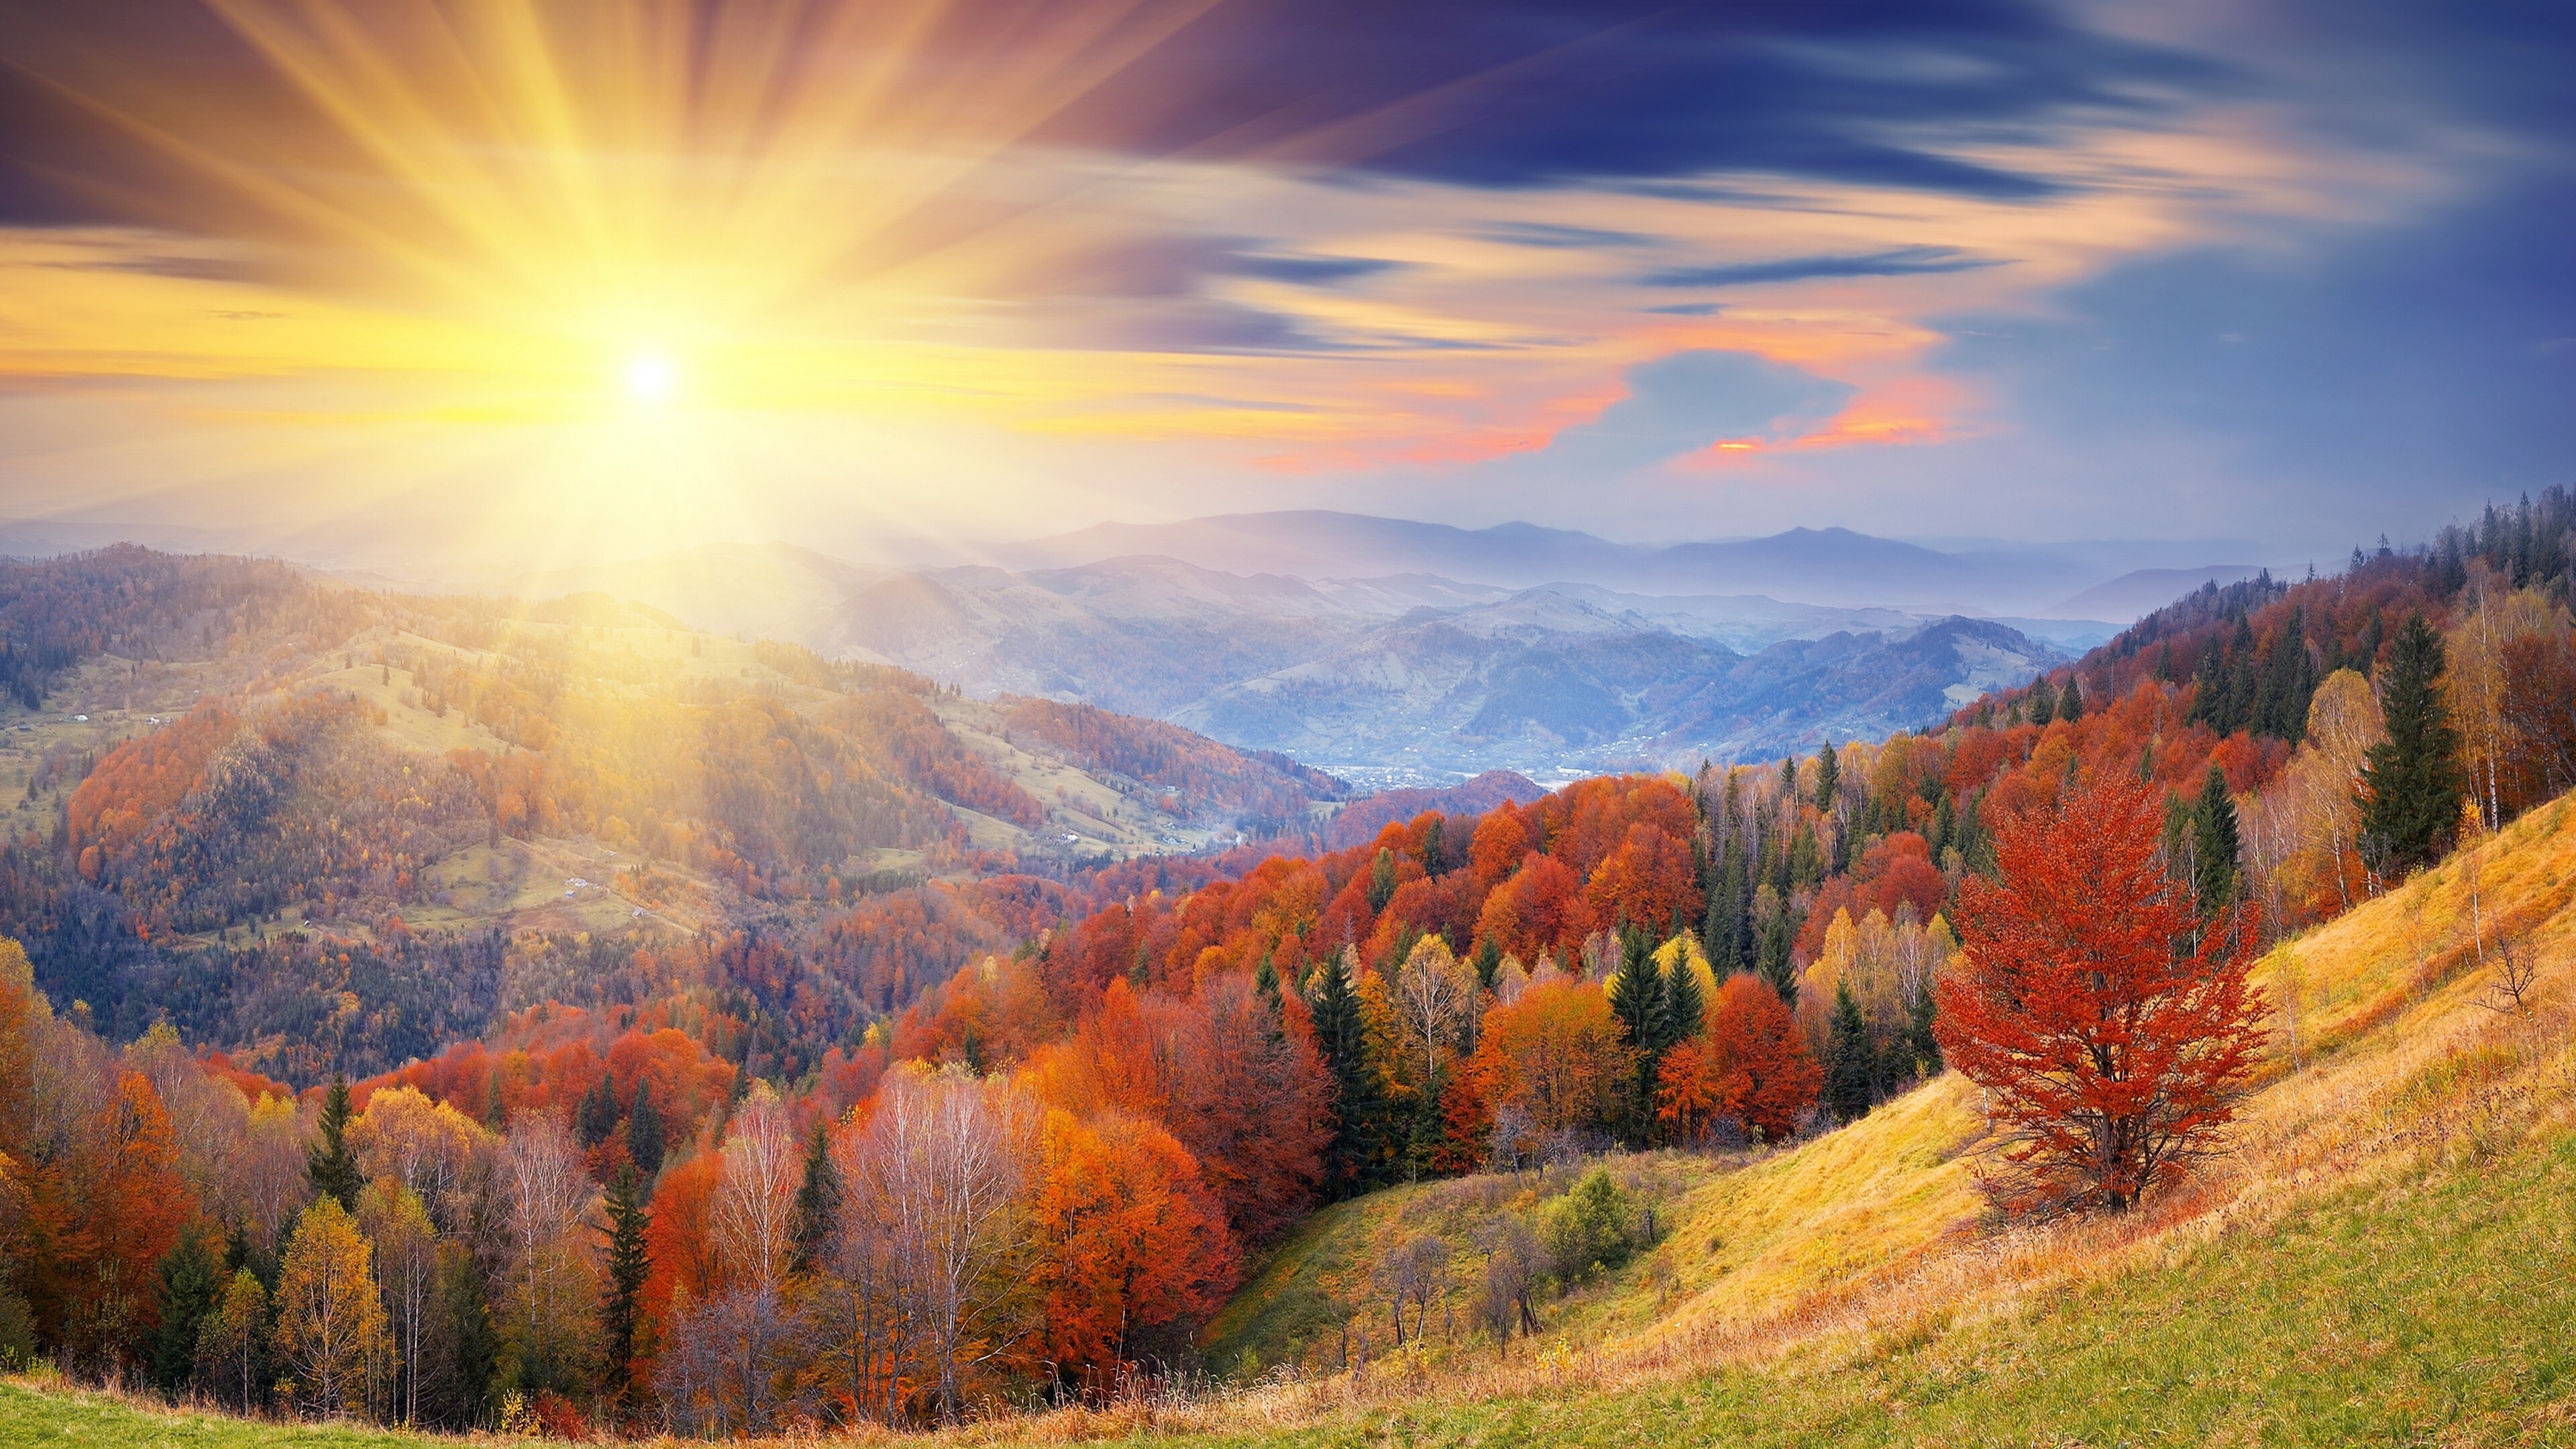 Autumn: Beautiful fall foliage, Landscape, Nature. 3840x2160 4K Wallpaper.